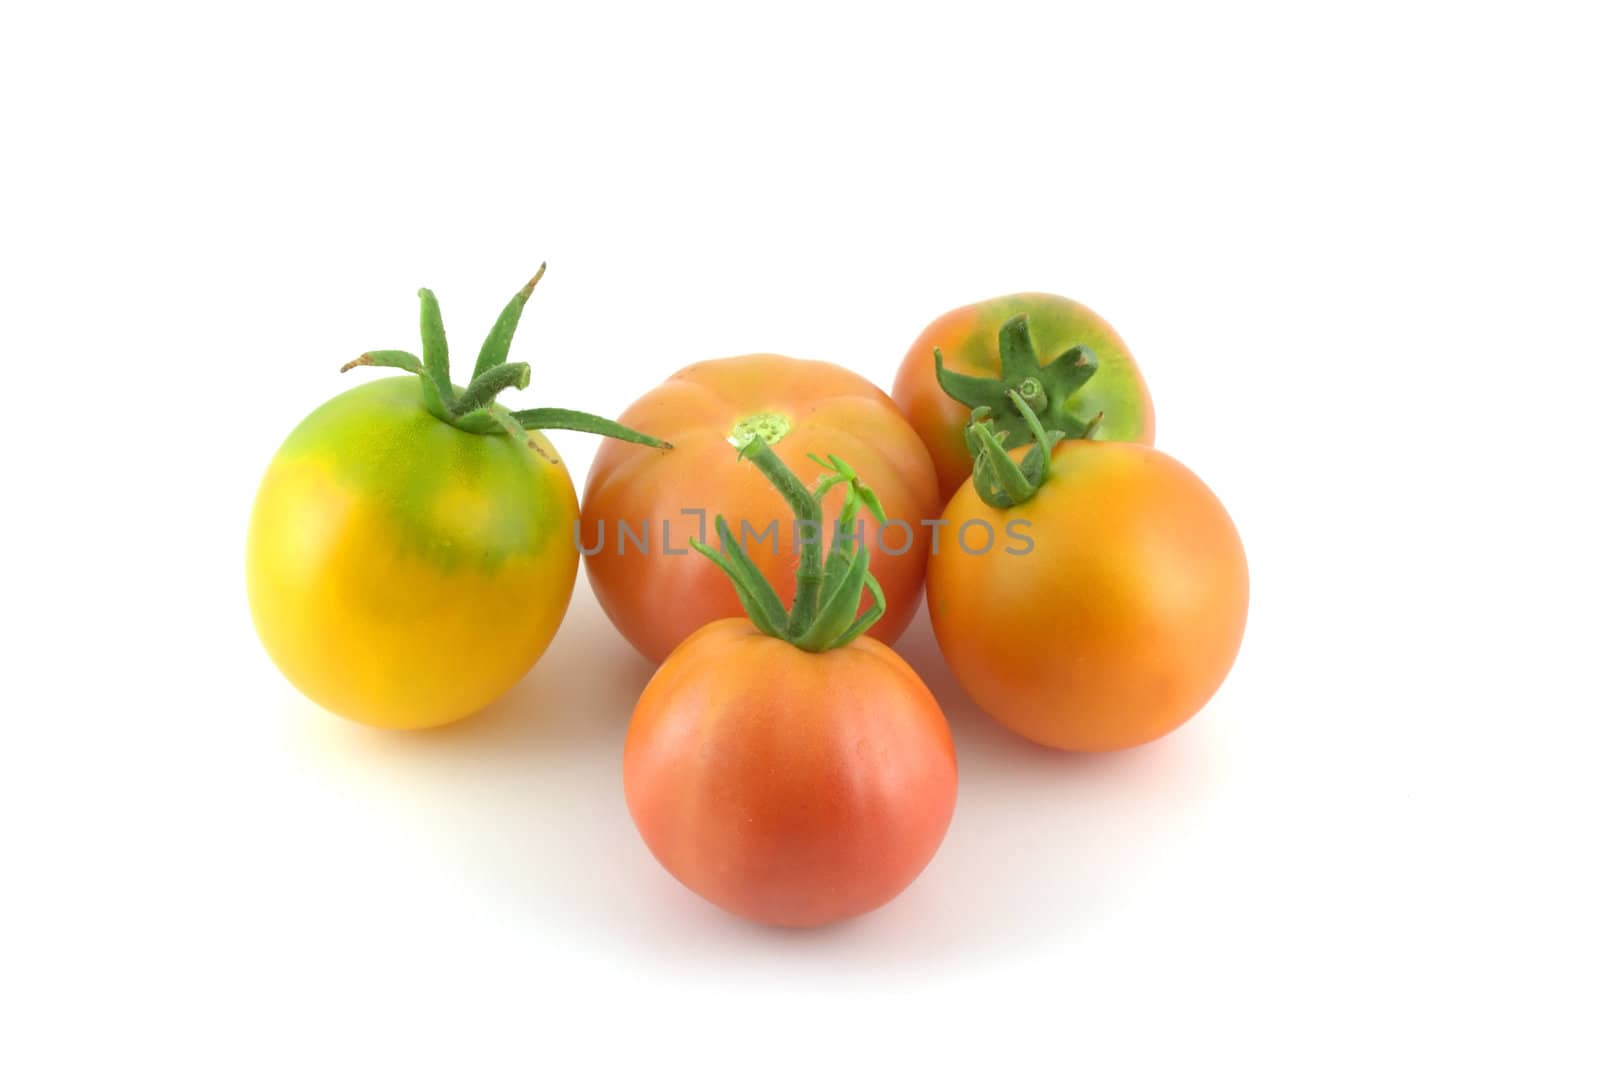 Ripe tomatoes on white background